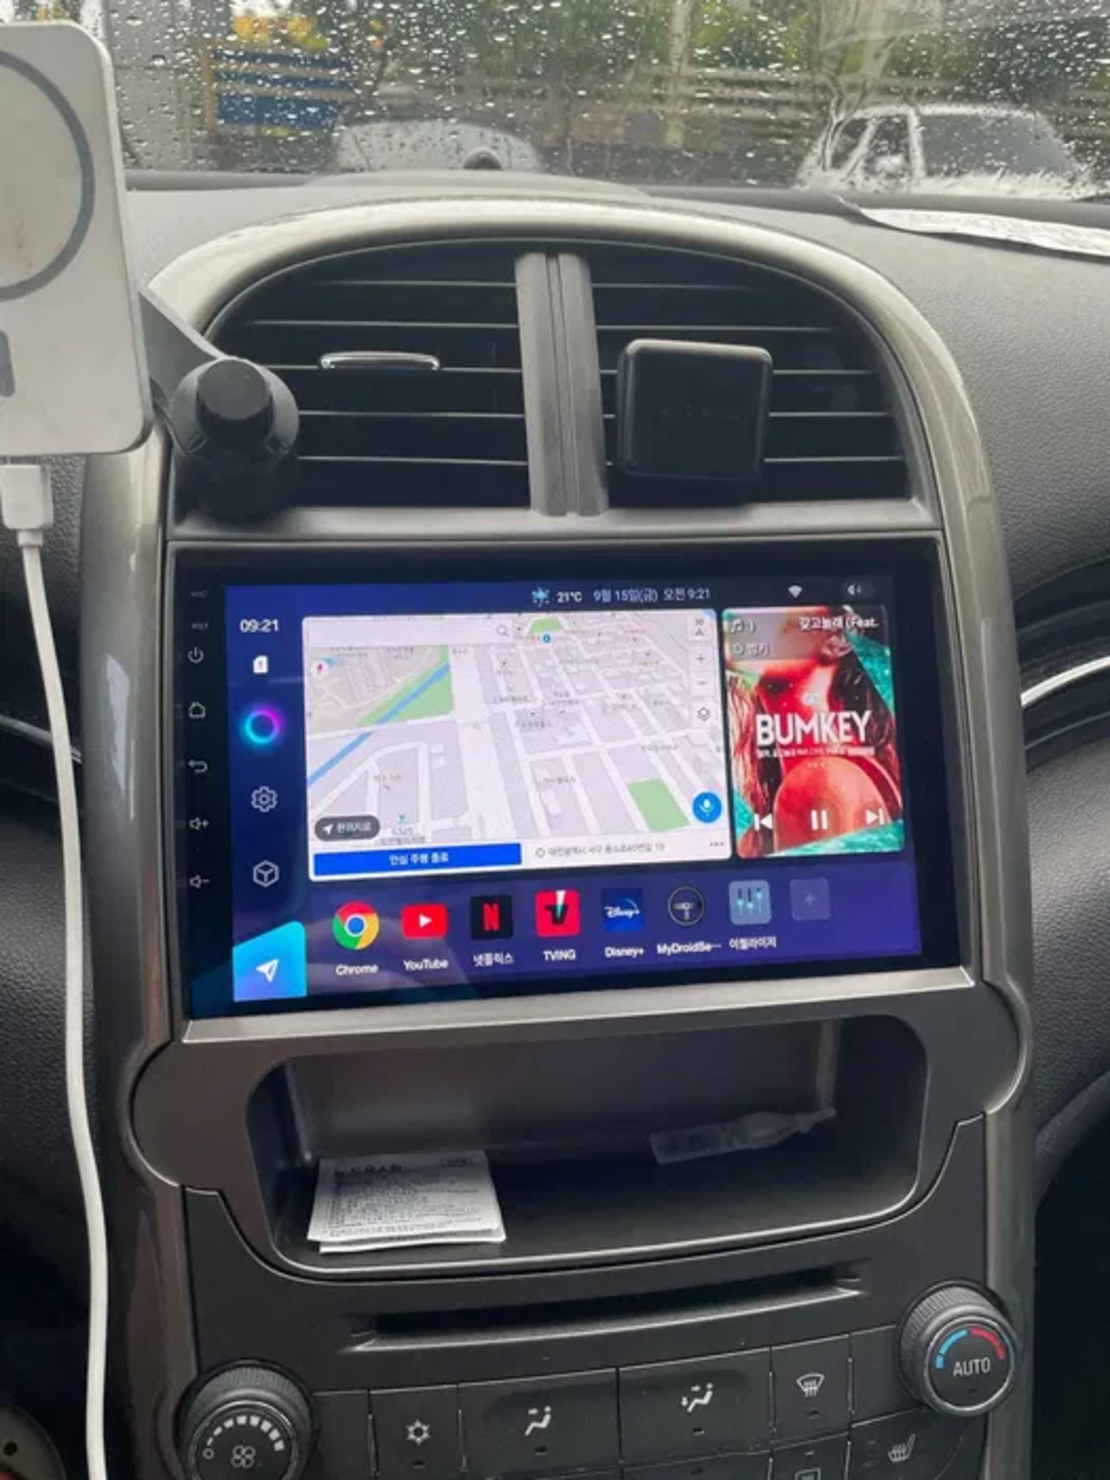 Chevrolet Malibu 2011-2015, Android Multimedia/Navigation